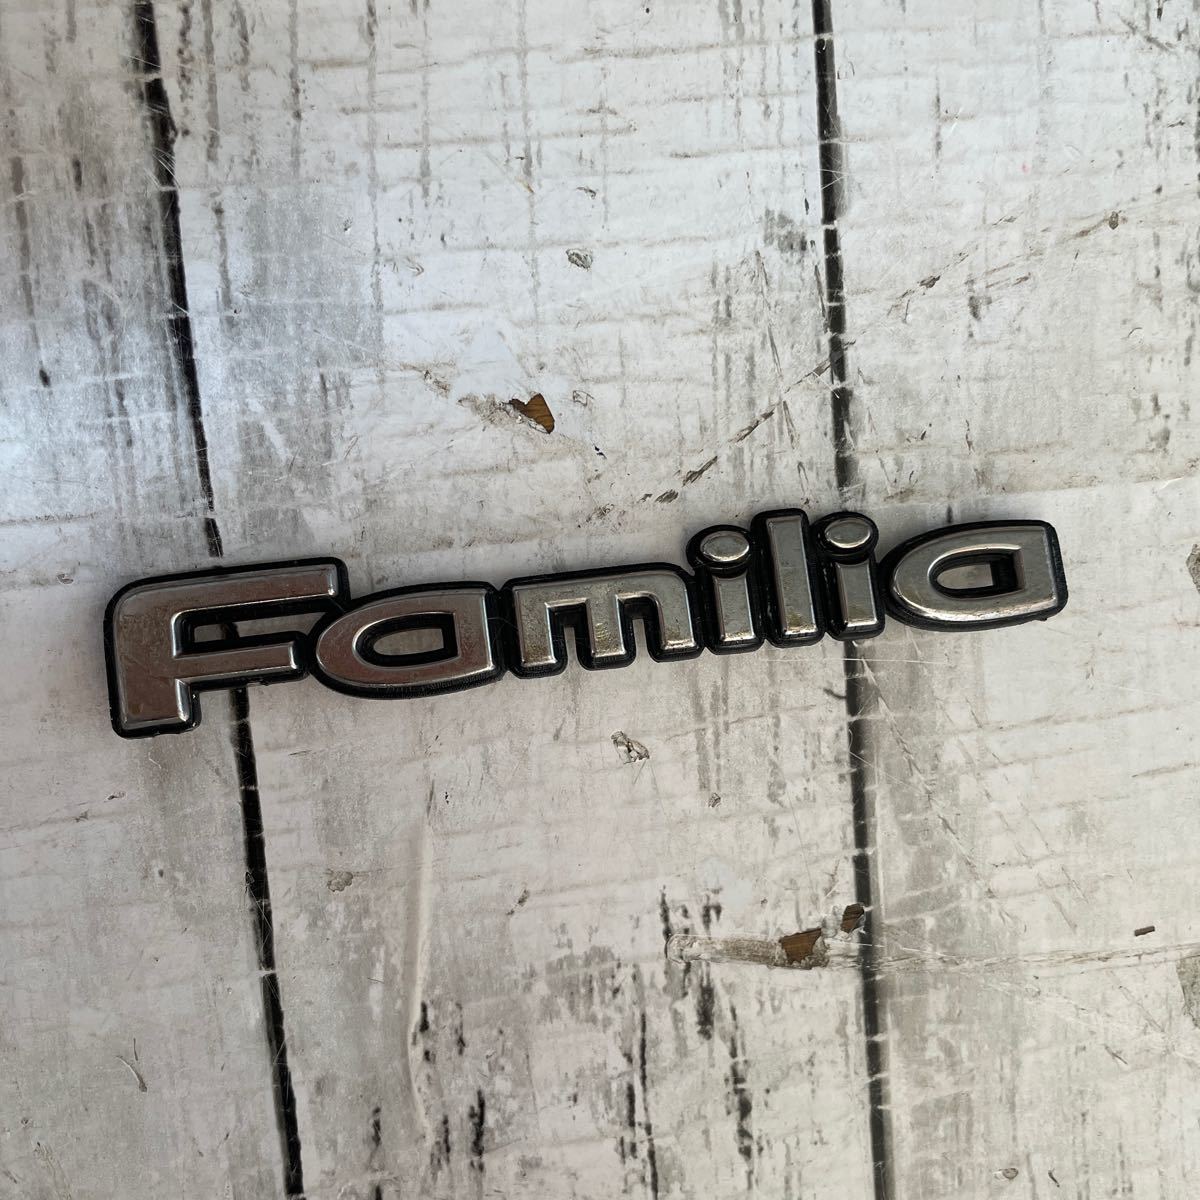 MAZDA Mazda Familia Familia emblem . quality plastic that time thing 